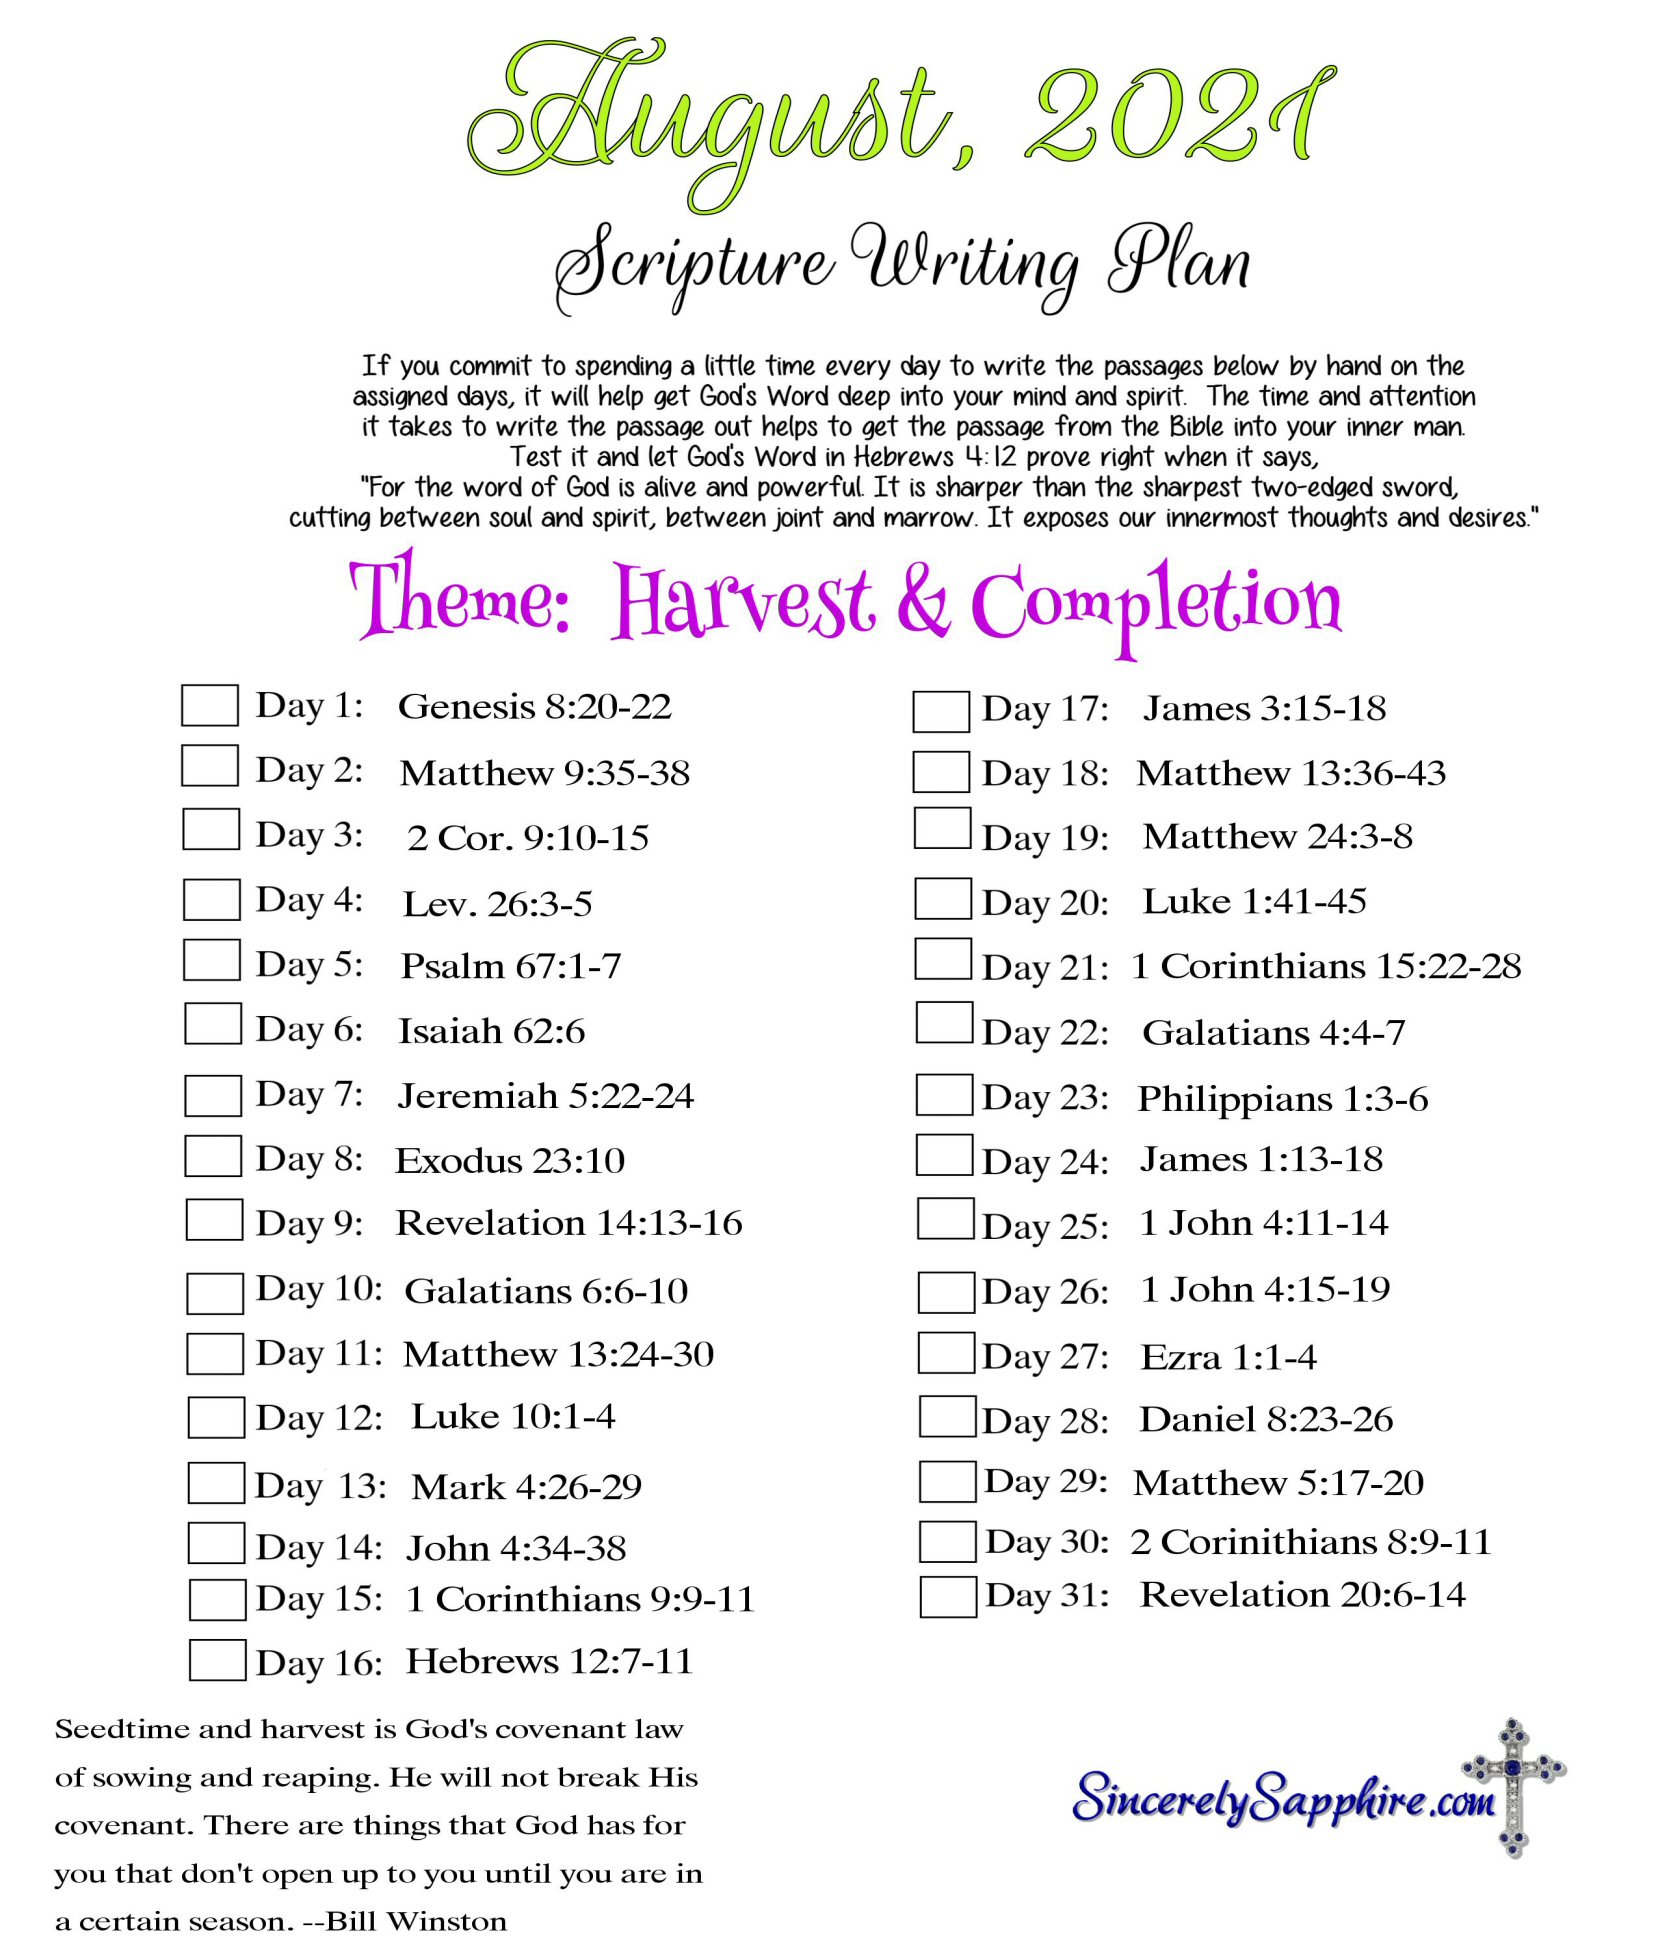 August 2021 Scripture Writing Plan